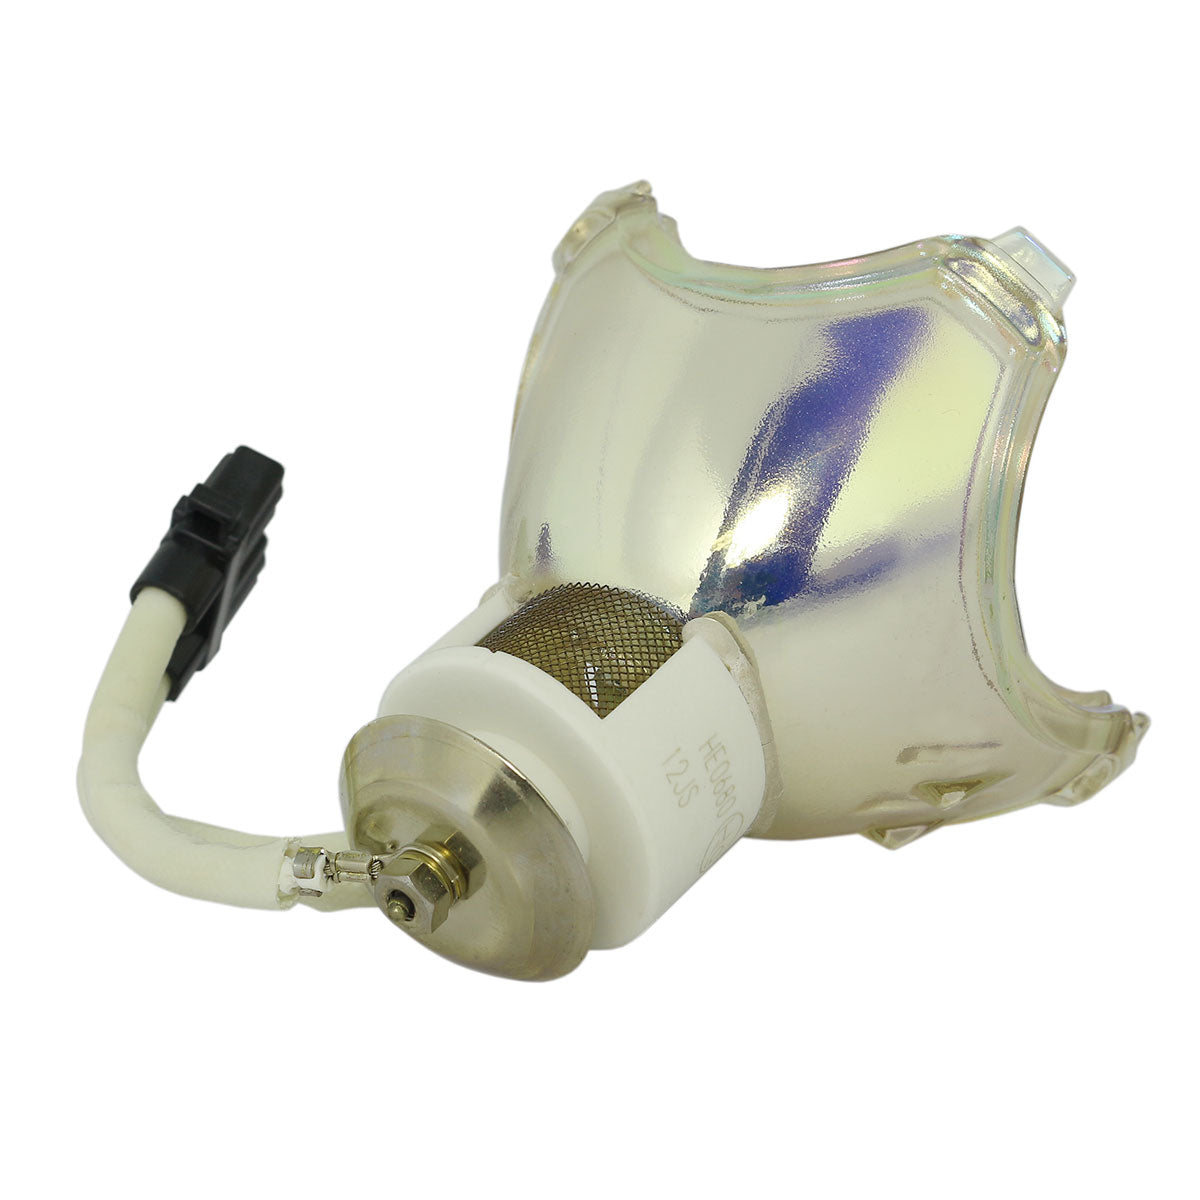 Dukane 456-8946 Ushio Projector Bare Lamp